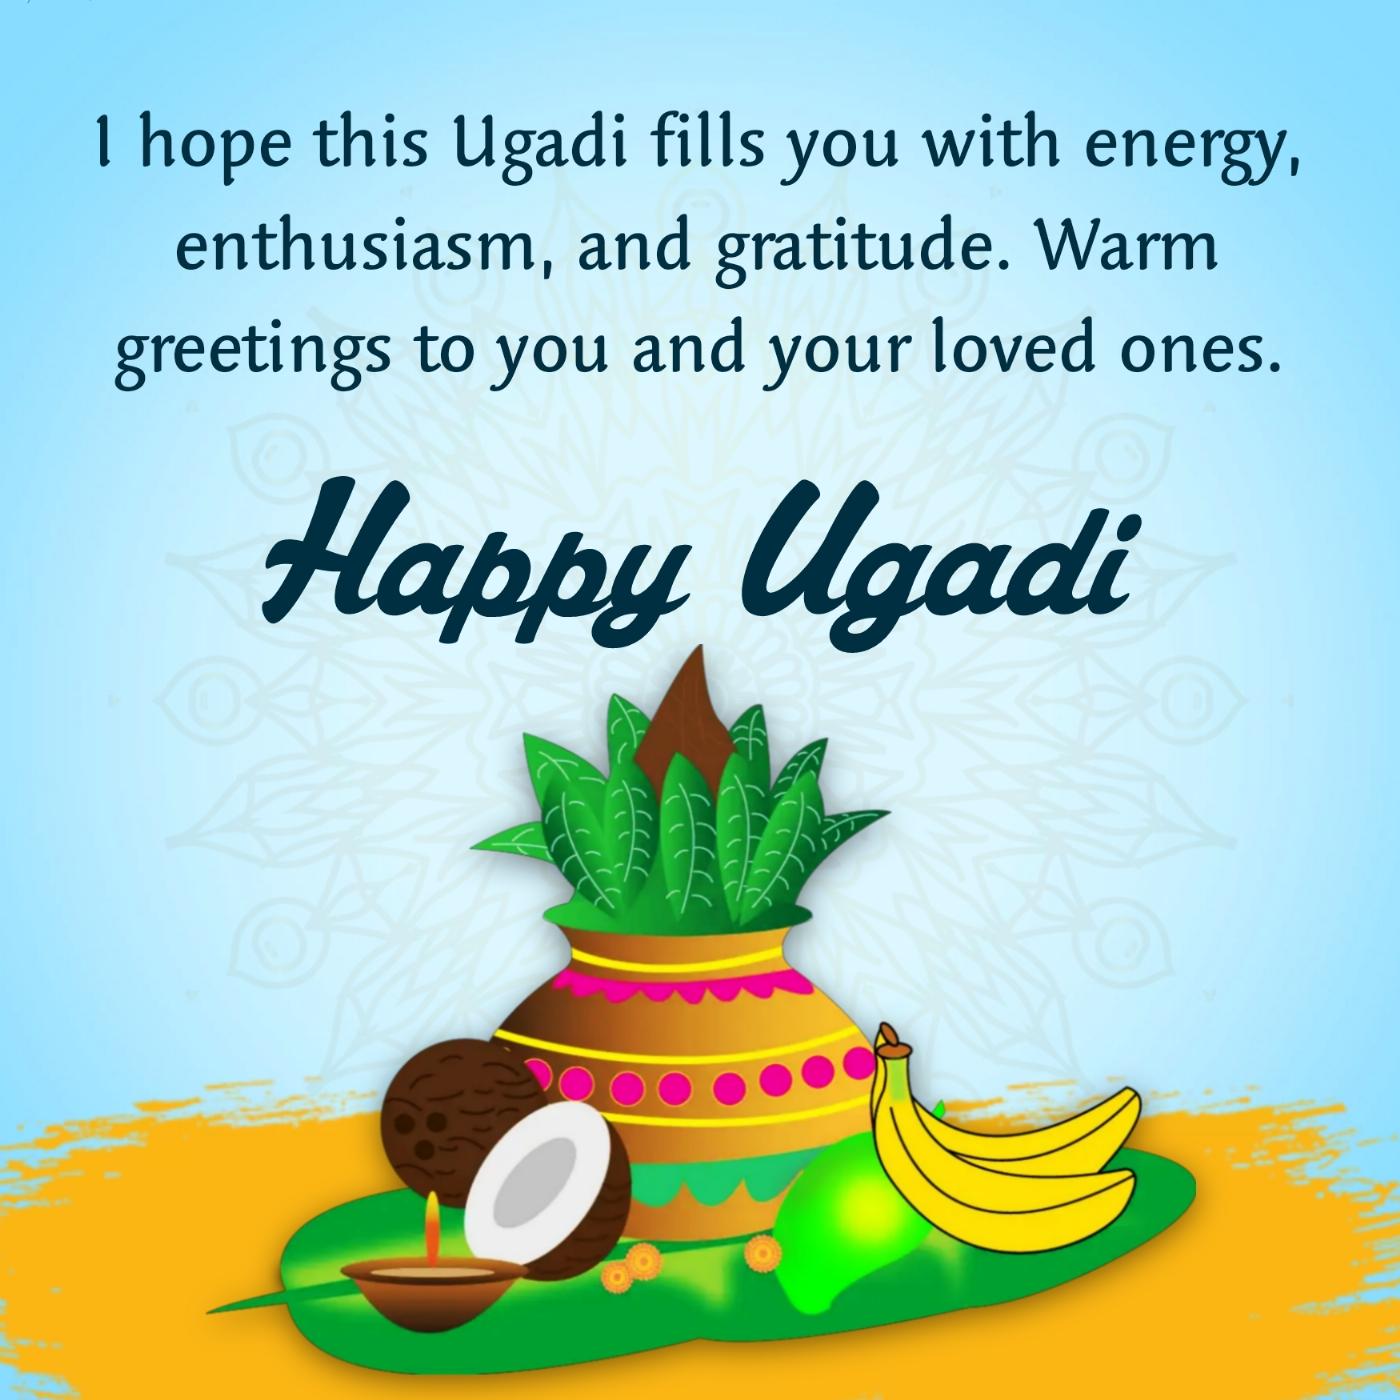 I hope this Ugadi fills you with energy enthusiasm